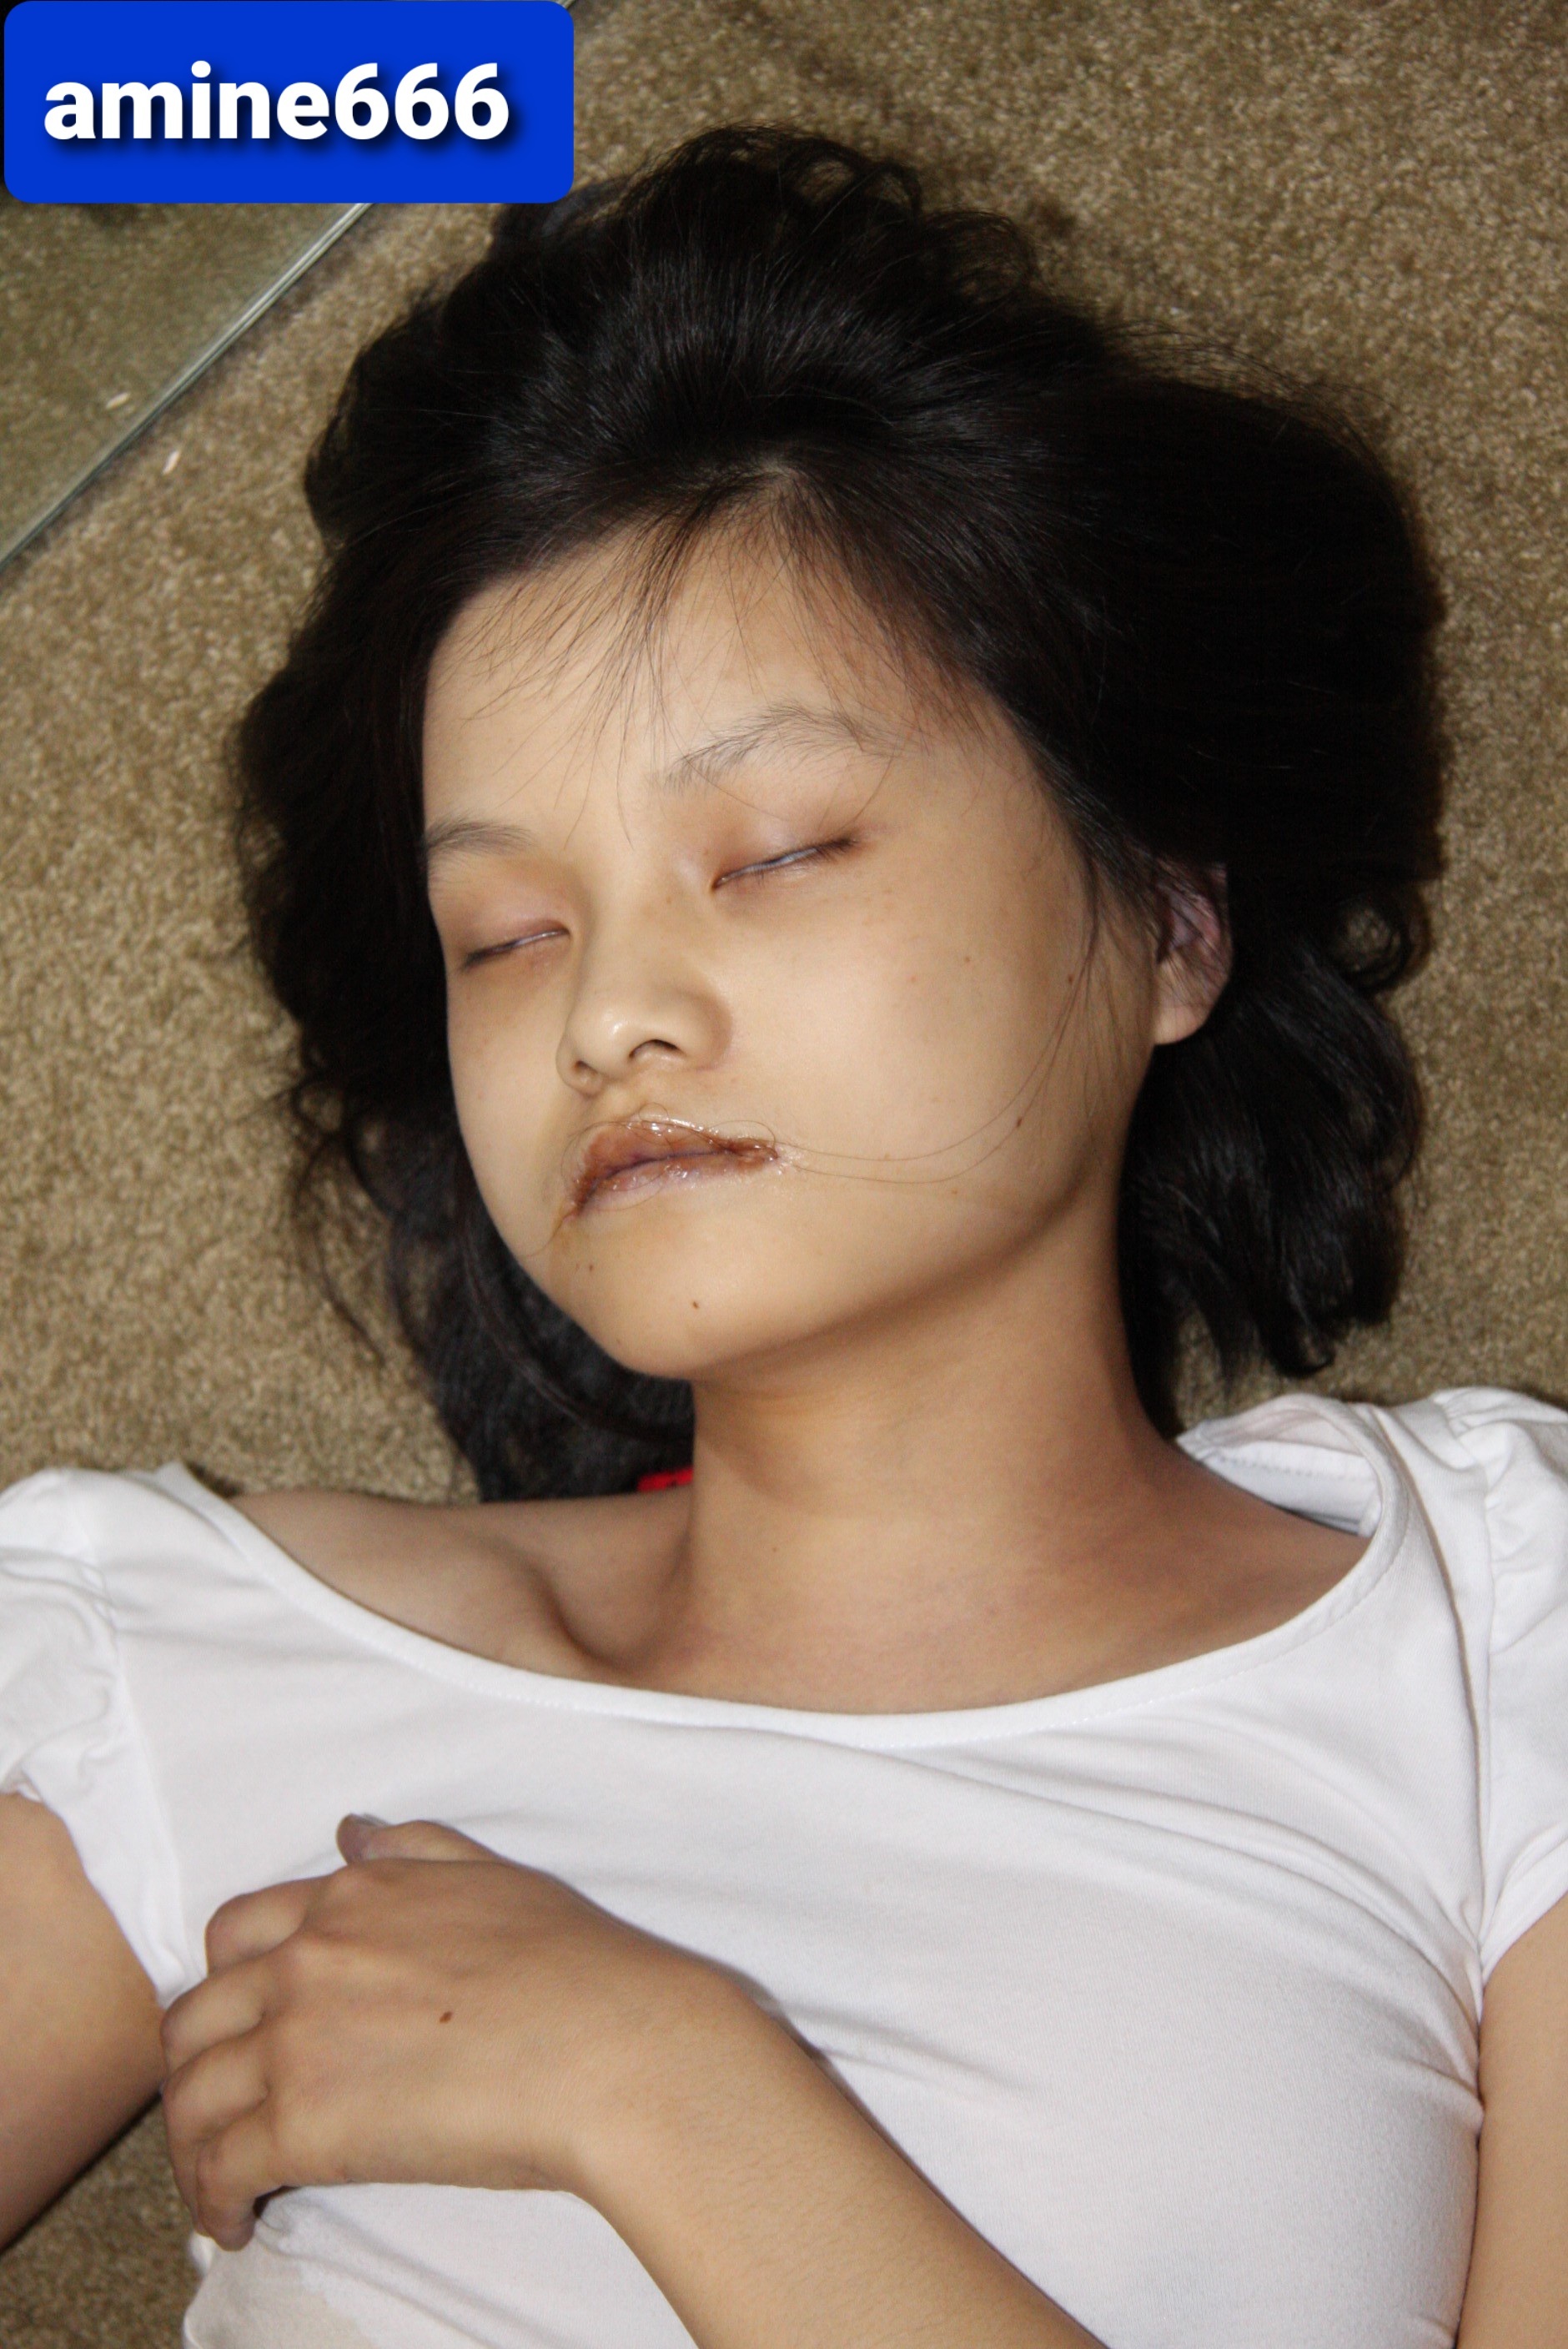 Innocent cute girl dead after HEROINE overdose theYNC